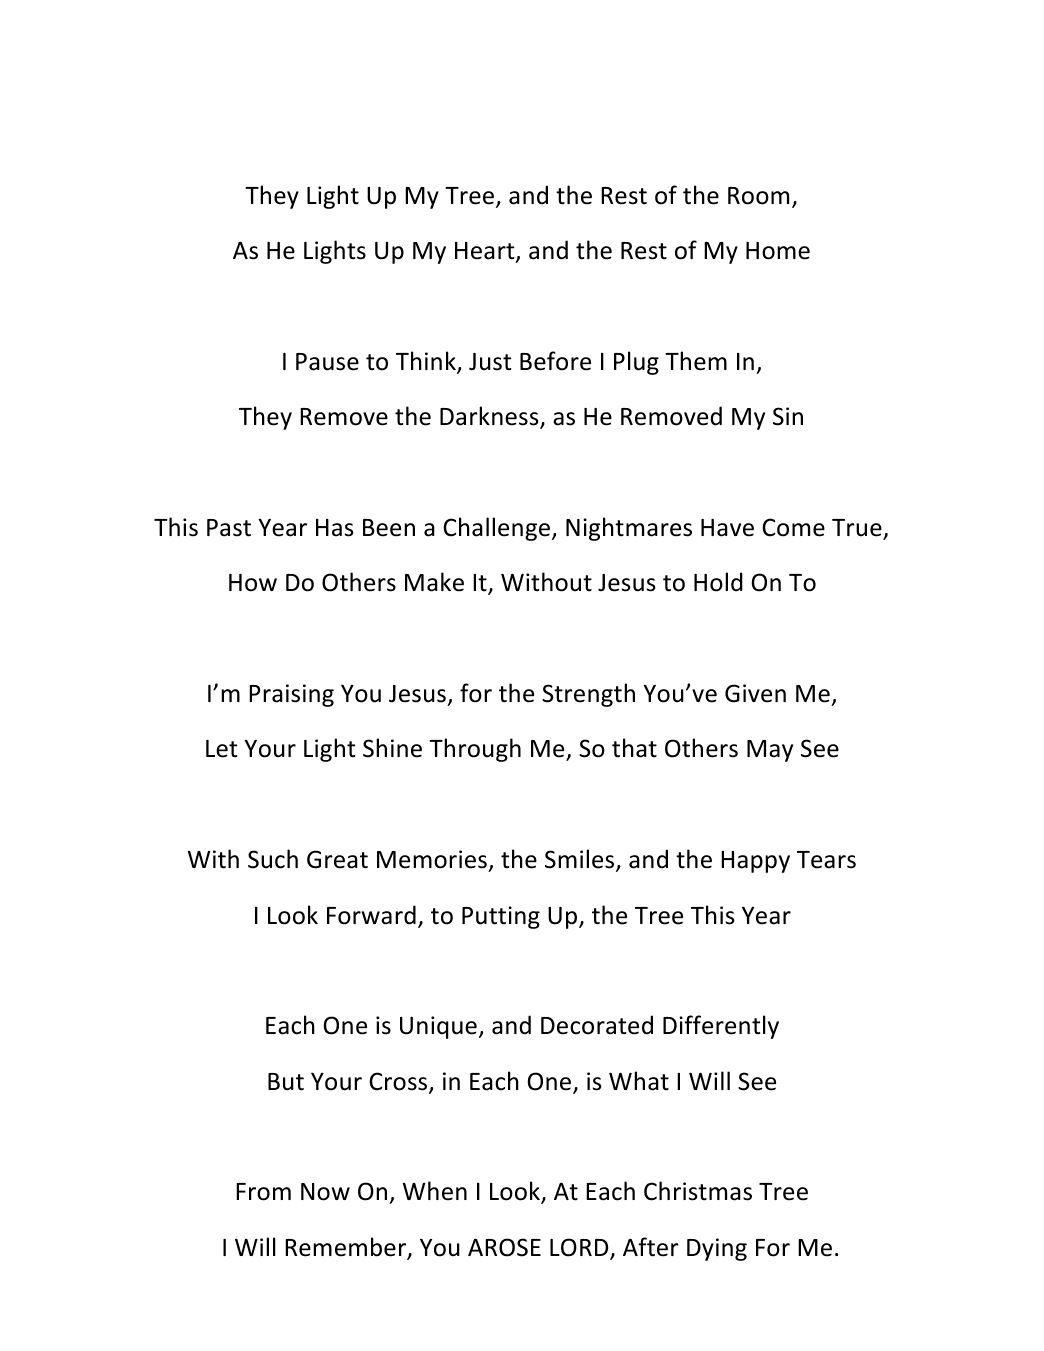 Christmas Poem 8